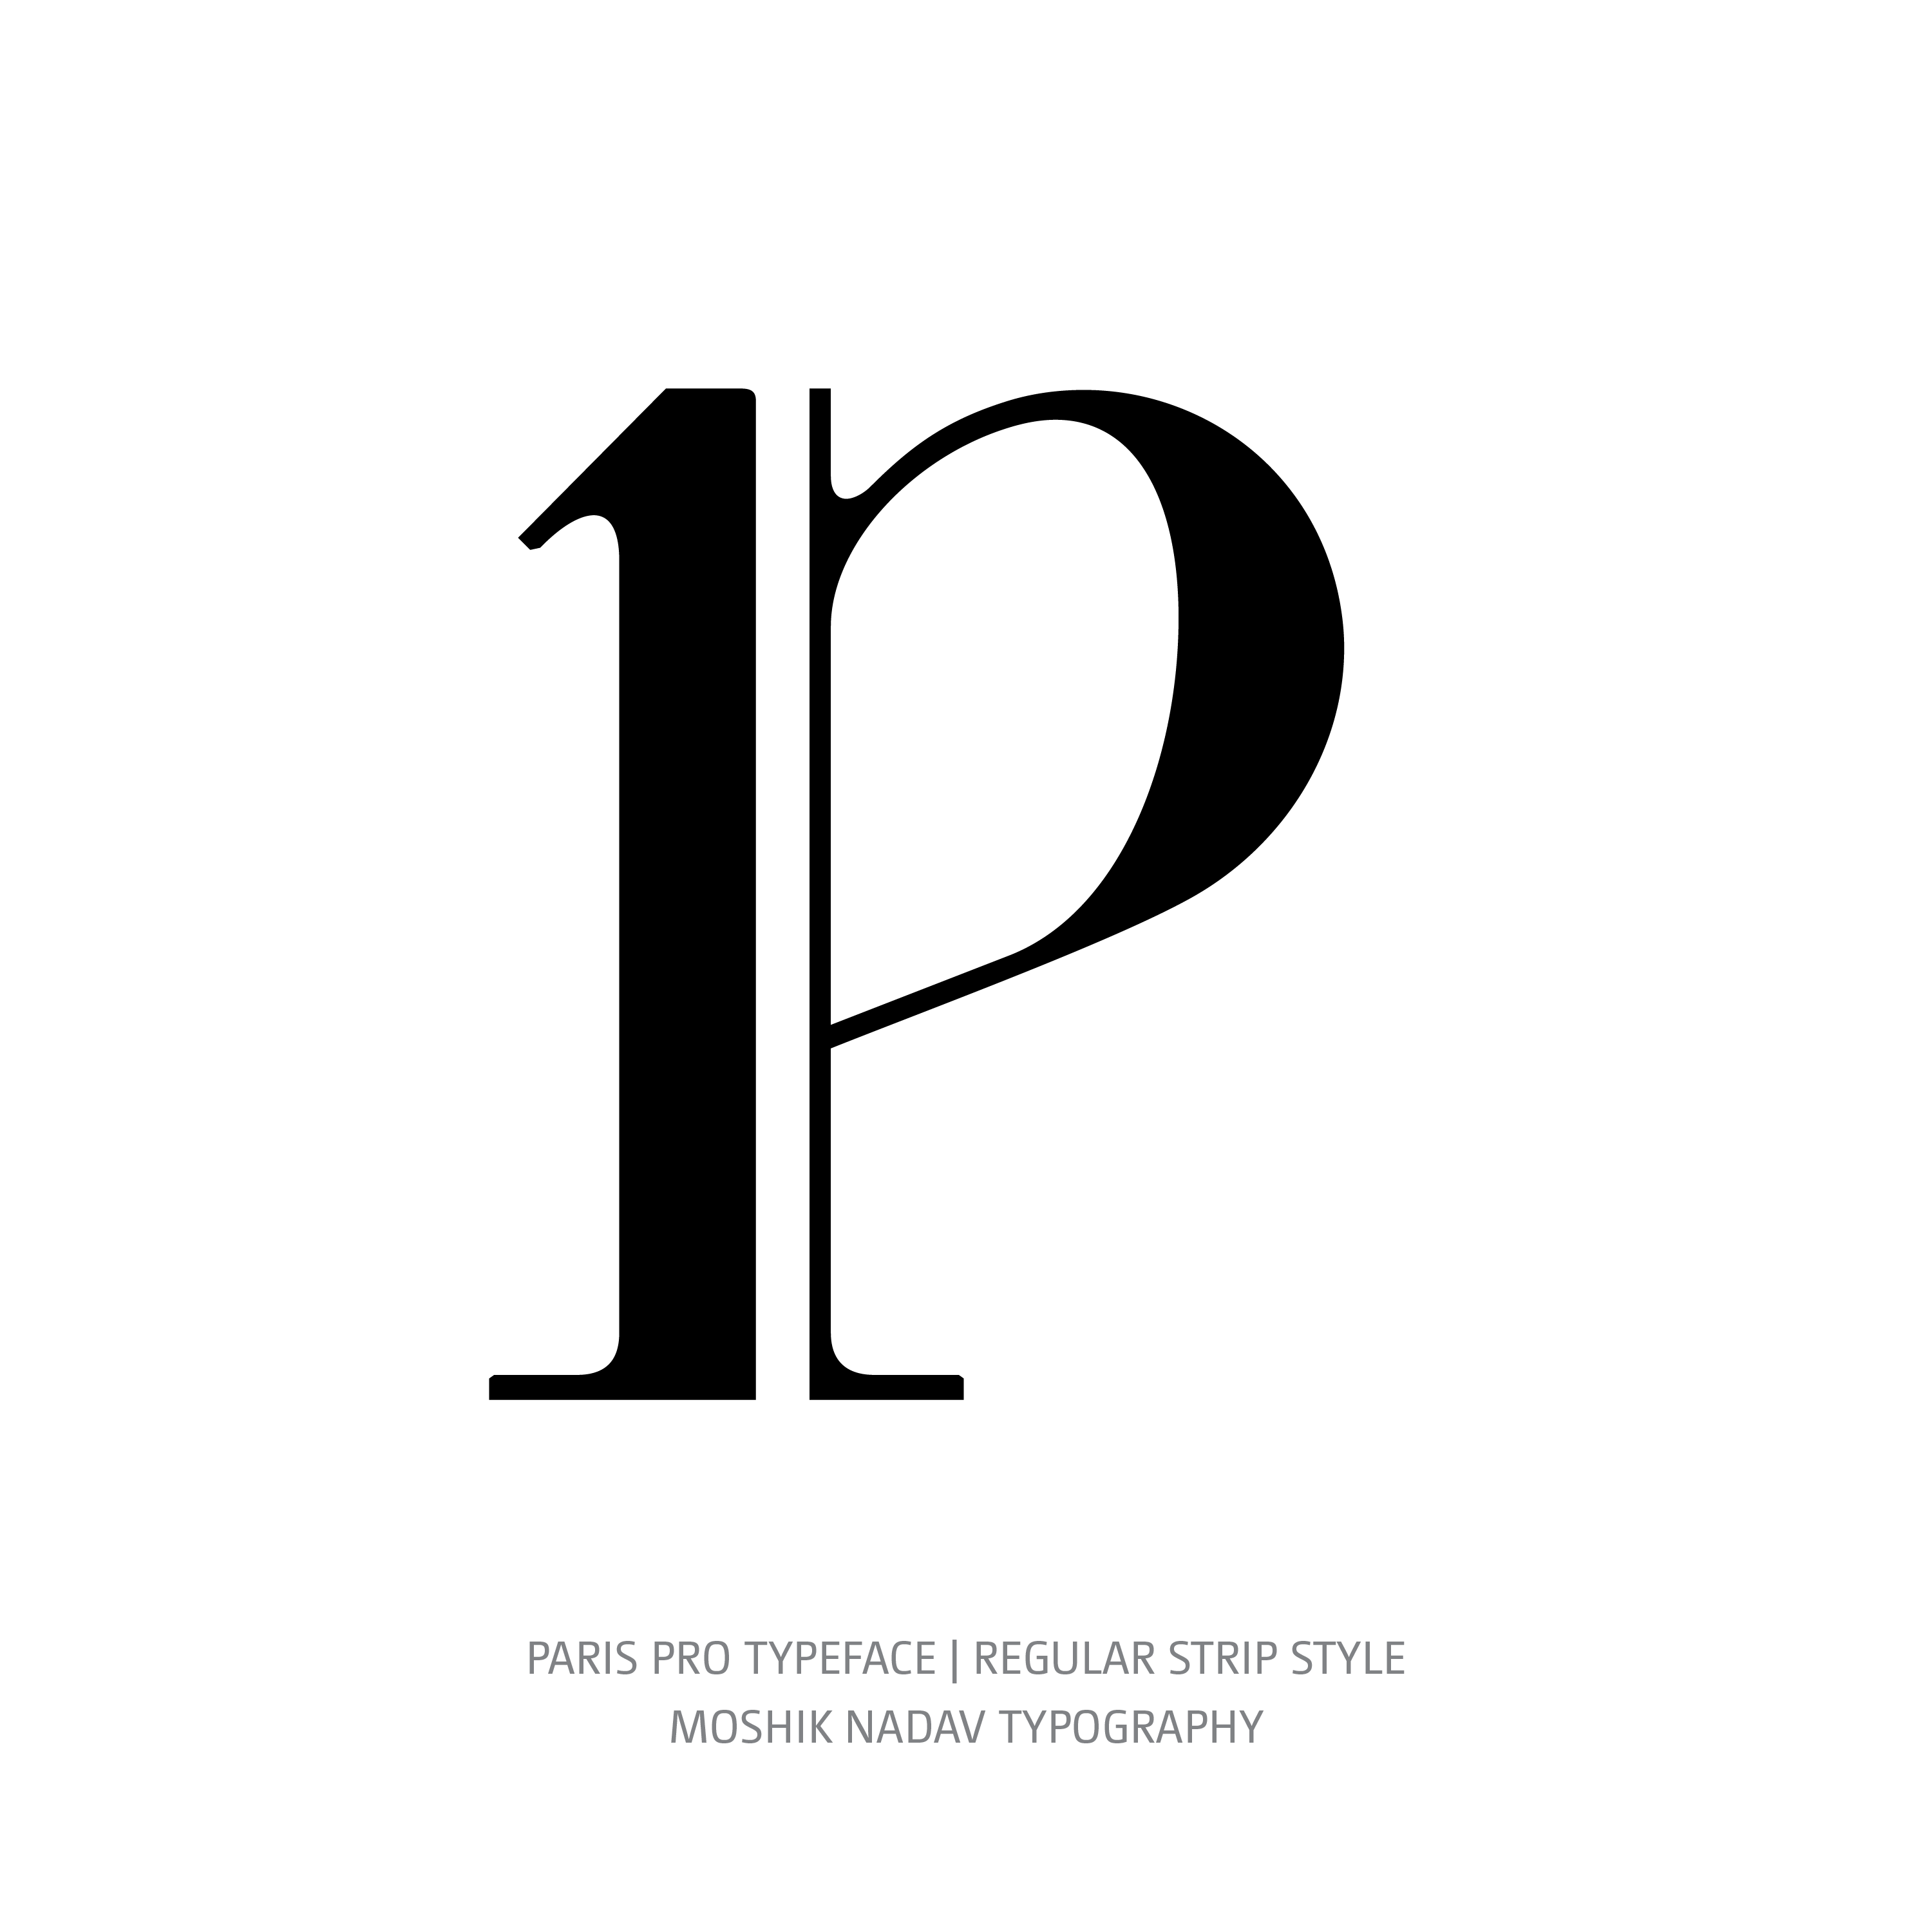 Paris Pro Typeface Regular Strip p